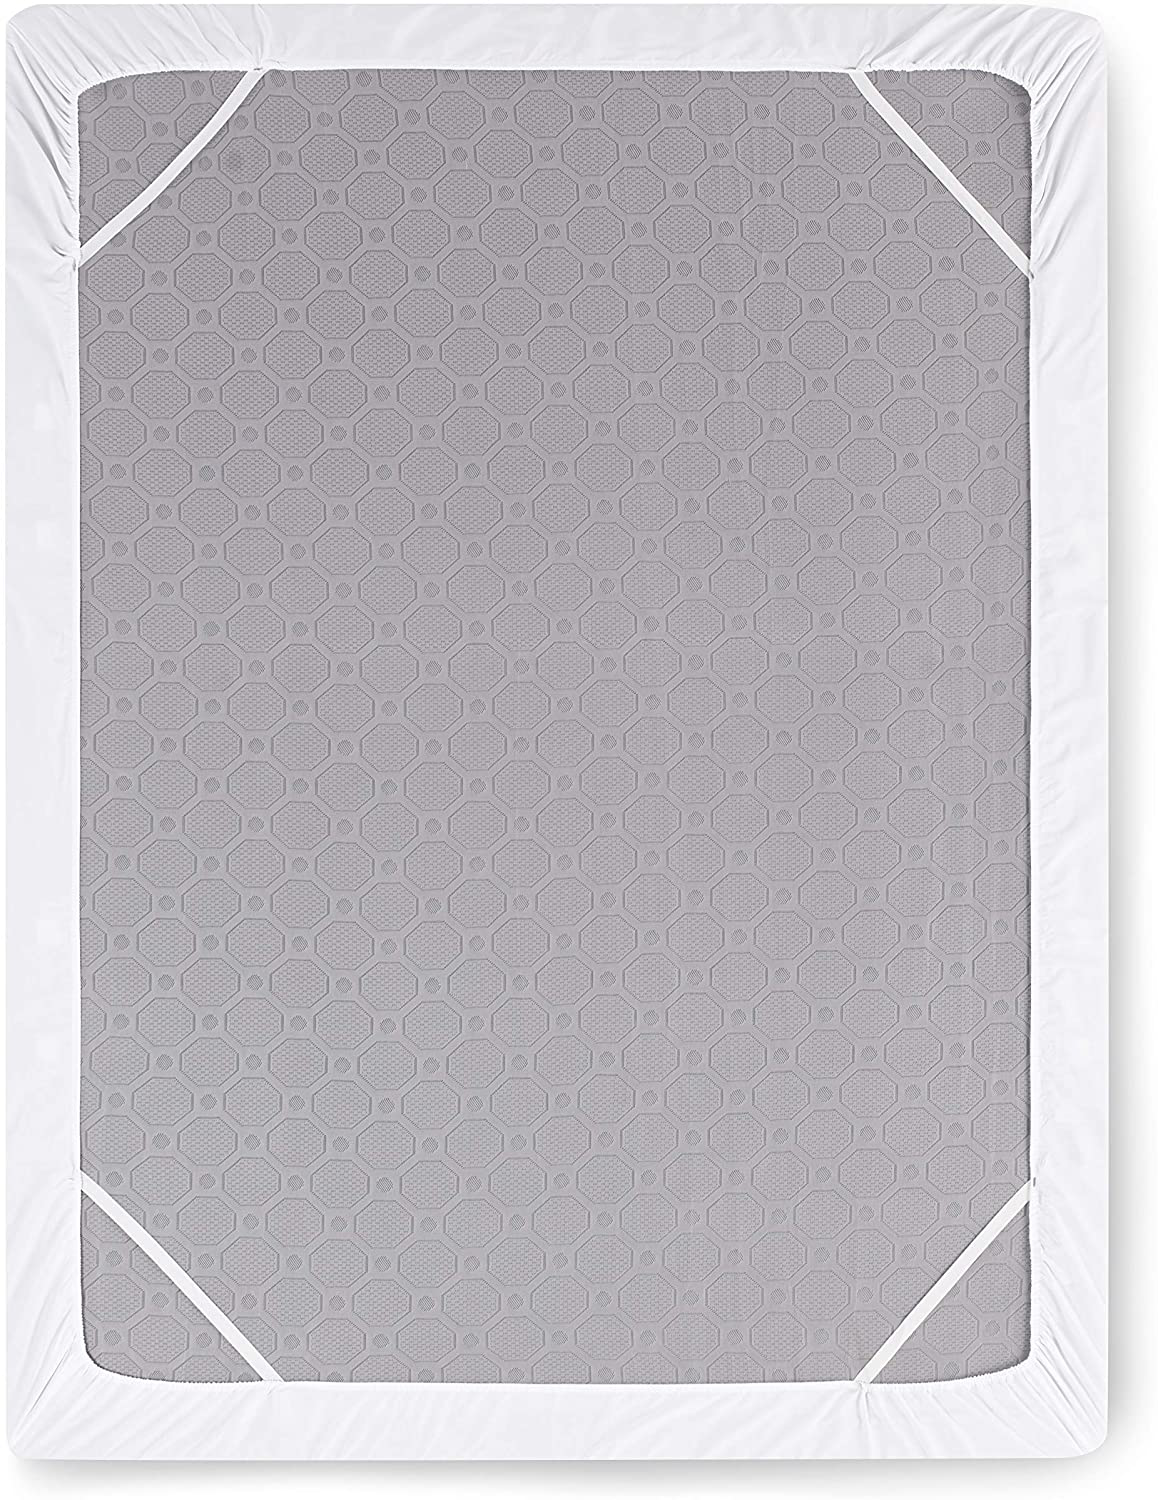 Nestl Kids Deep Pocket Twin XL Sheets: 3 Piece Twin XL Size Bed Sheets with Fitted Sheet, Flat Sheet, Pillow Case - Soft Bedsheet Set with Deep Pockets for Twin XL Size - Taupe